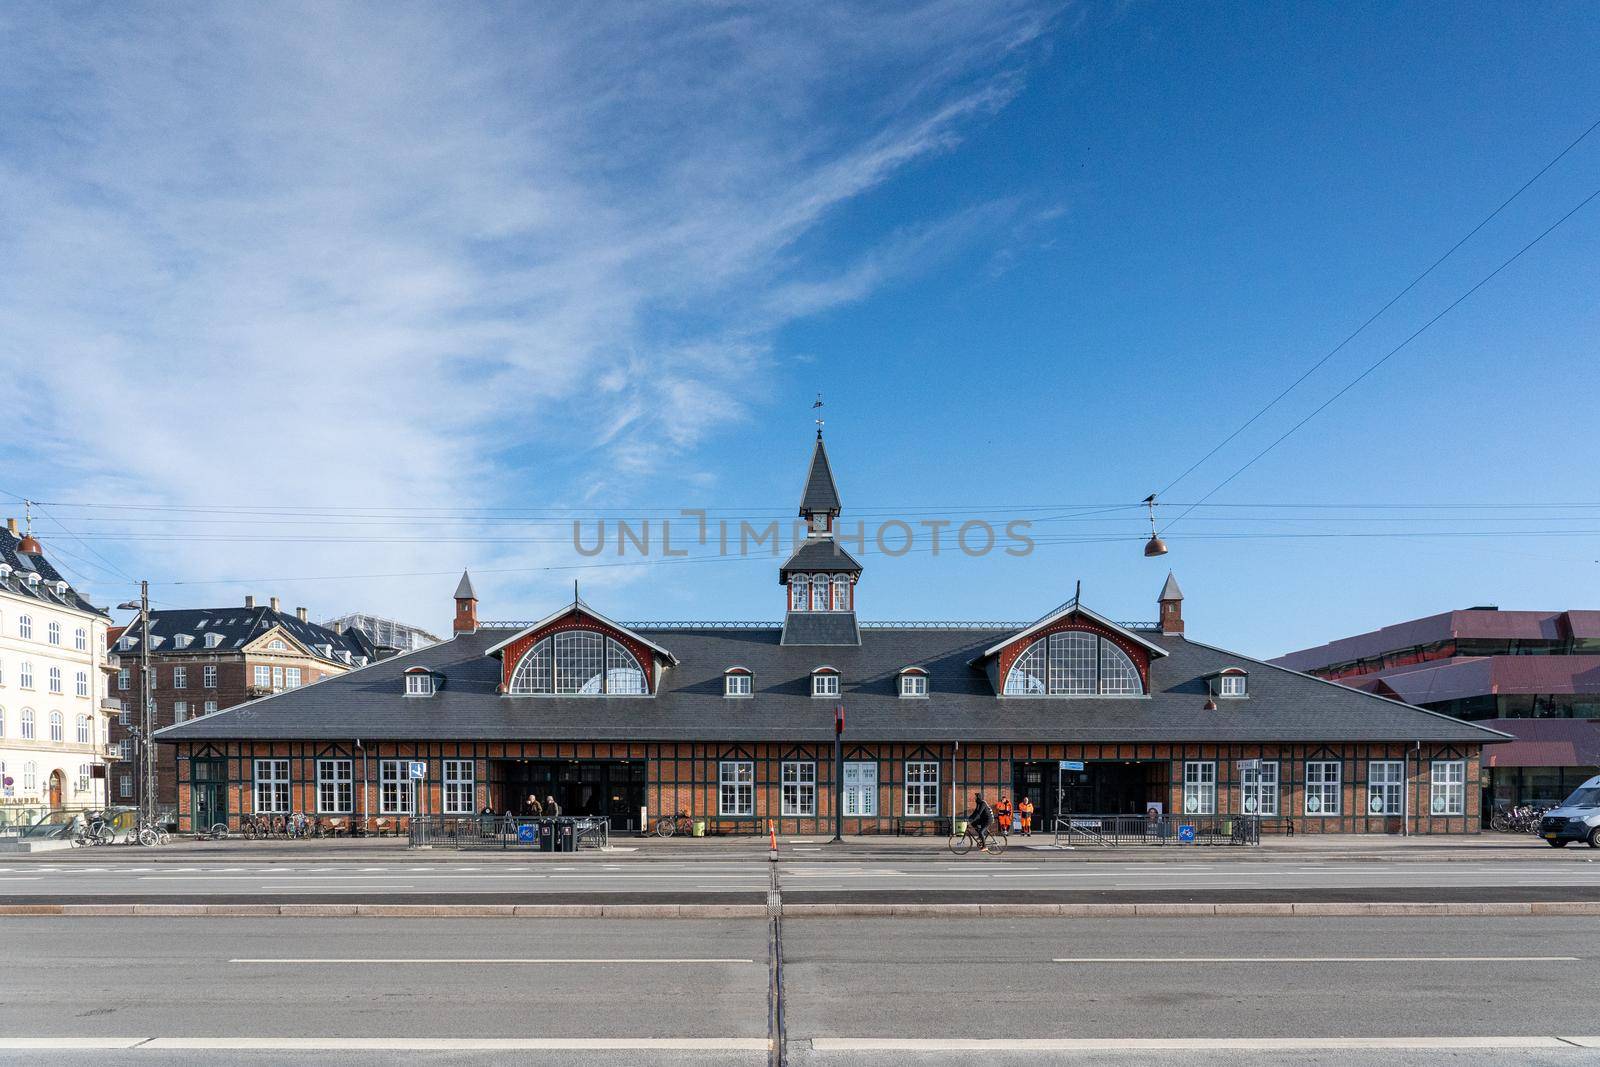 Osterport Station in Copenhagen by oliverfoerstner